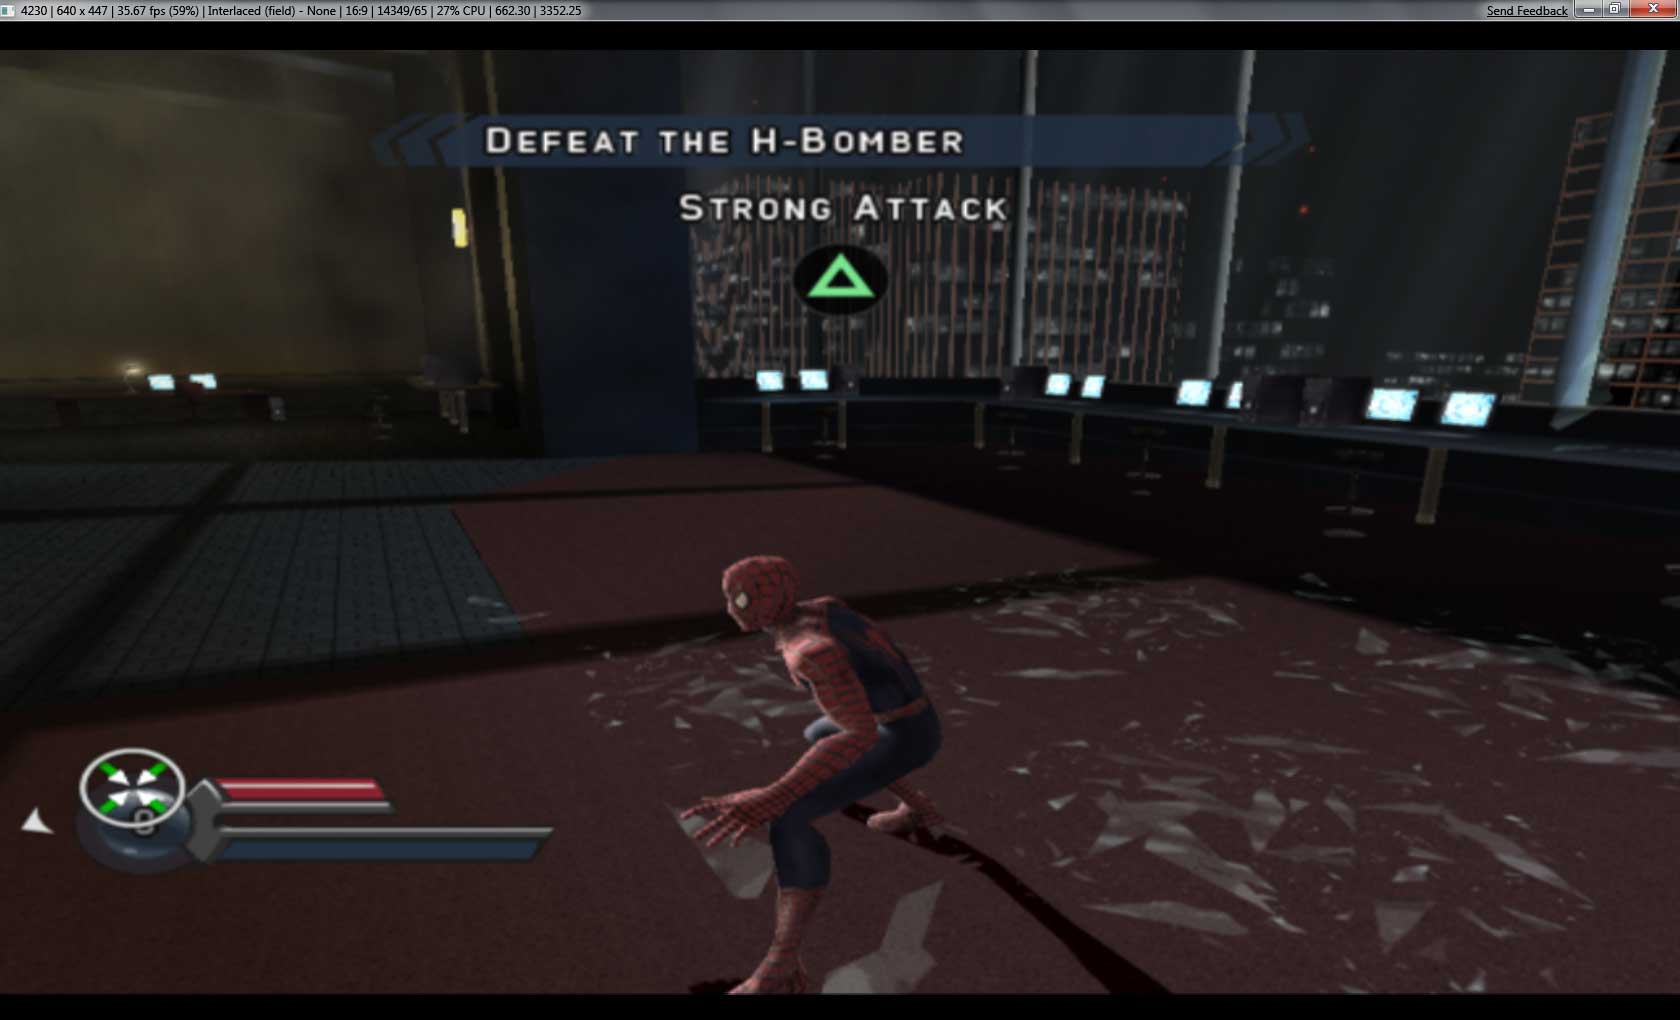 Spider-Man 3 PS2 Gameplay HD (PCSX2 v1.7.0) 